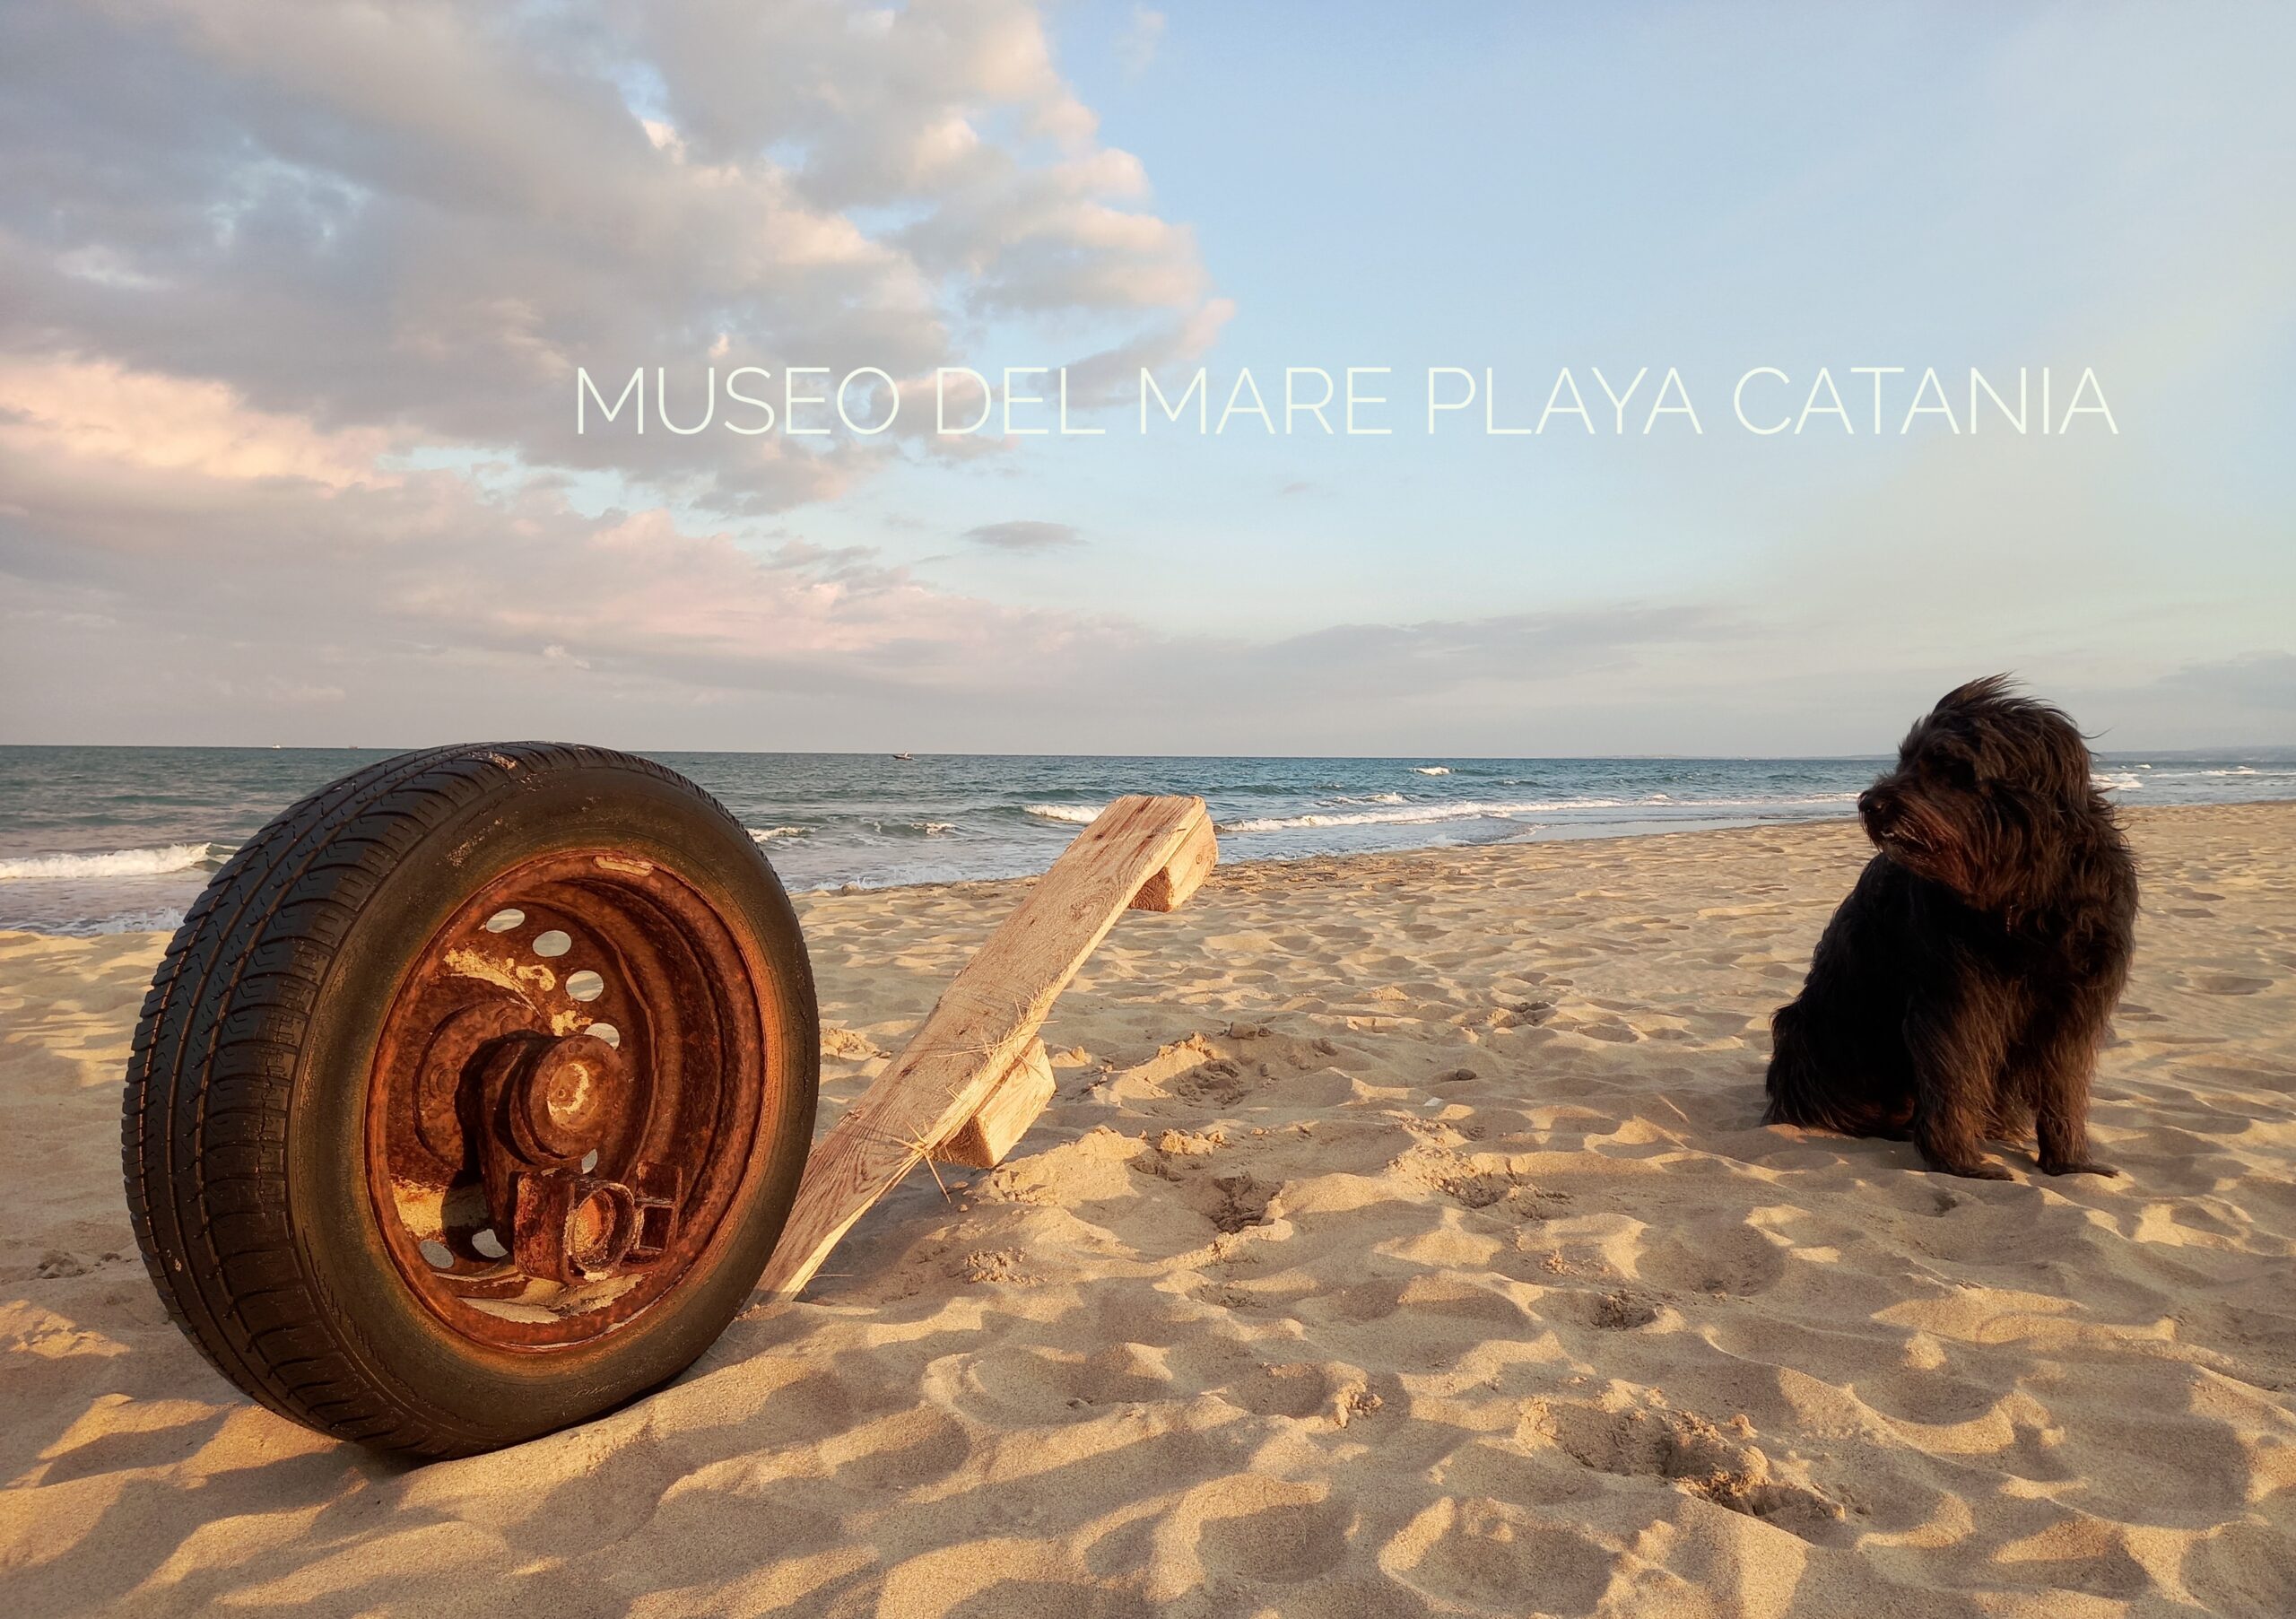 Museo del mare playa catania